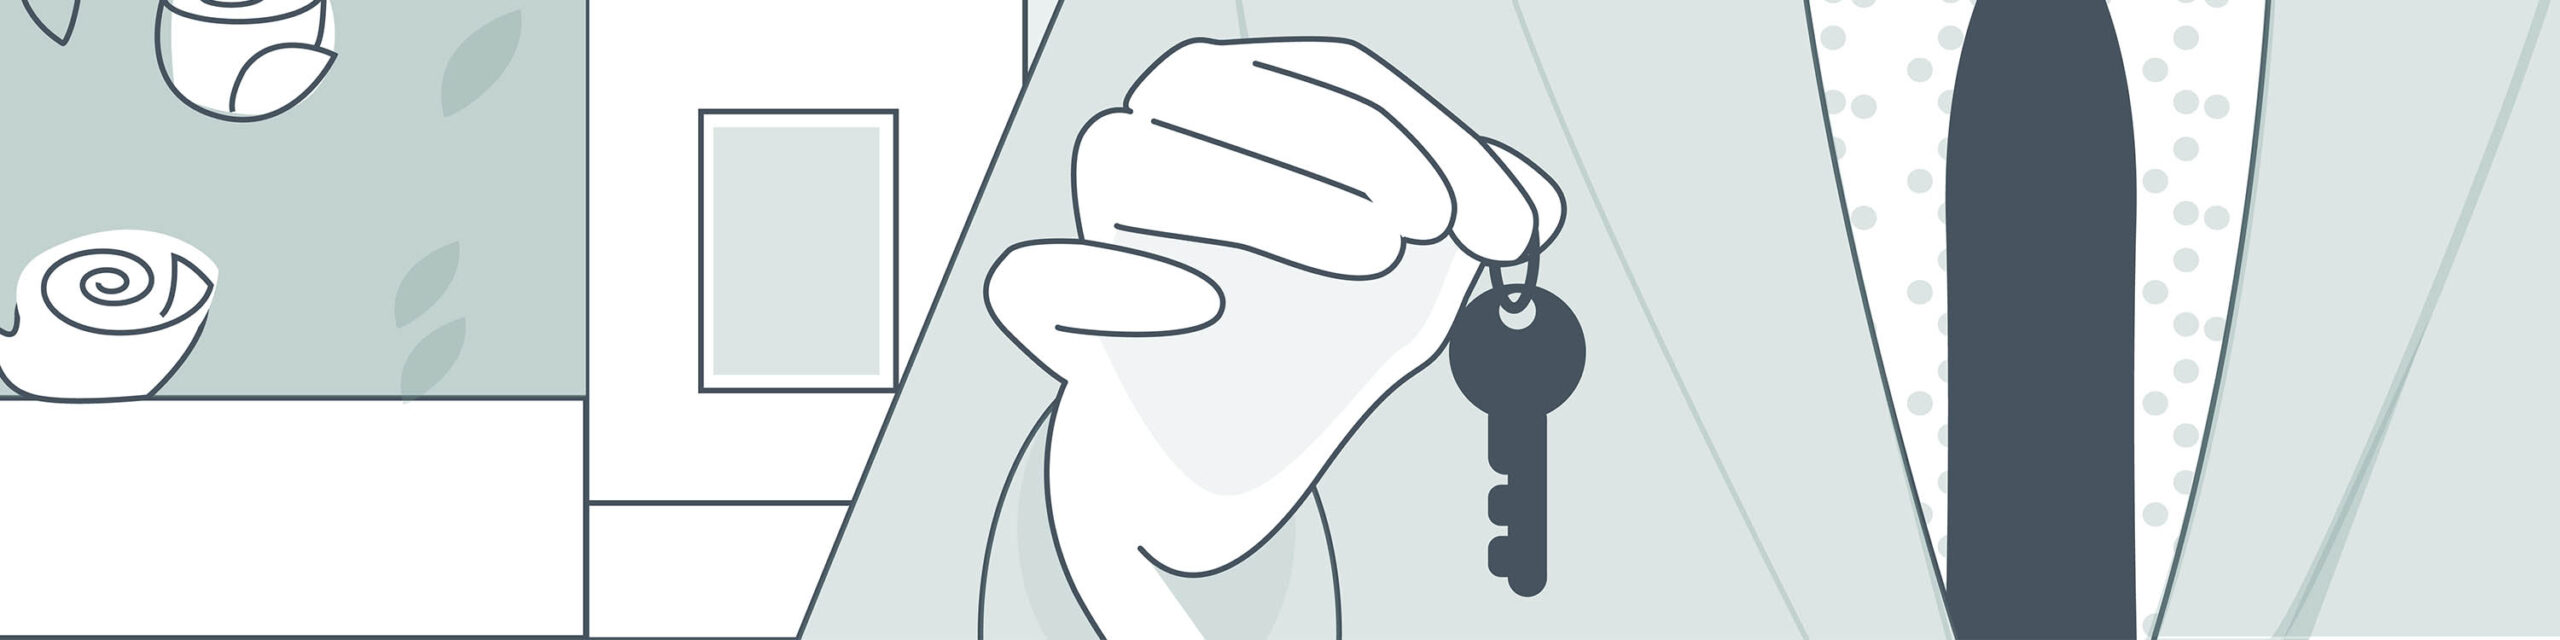 Illustration of man's hand holding house key